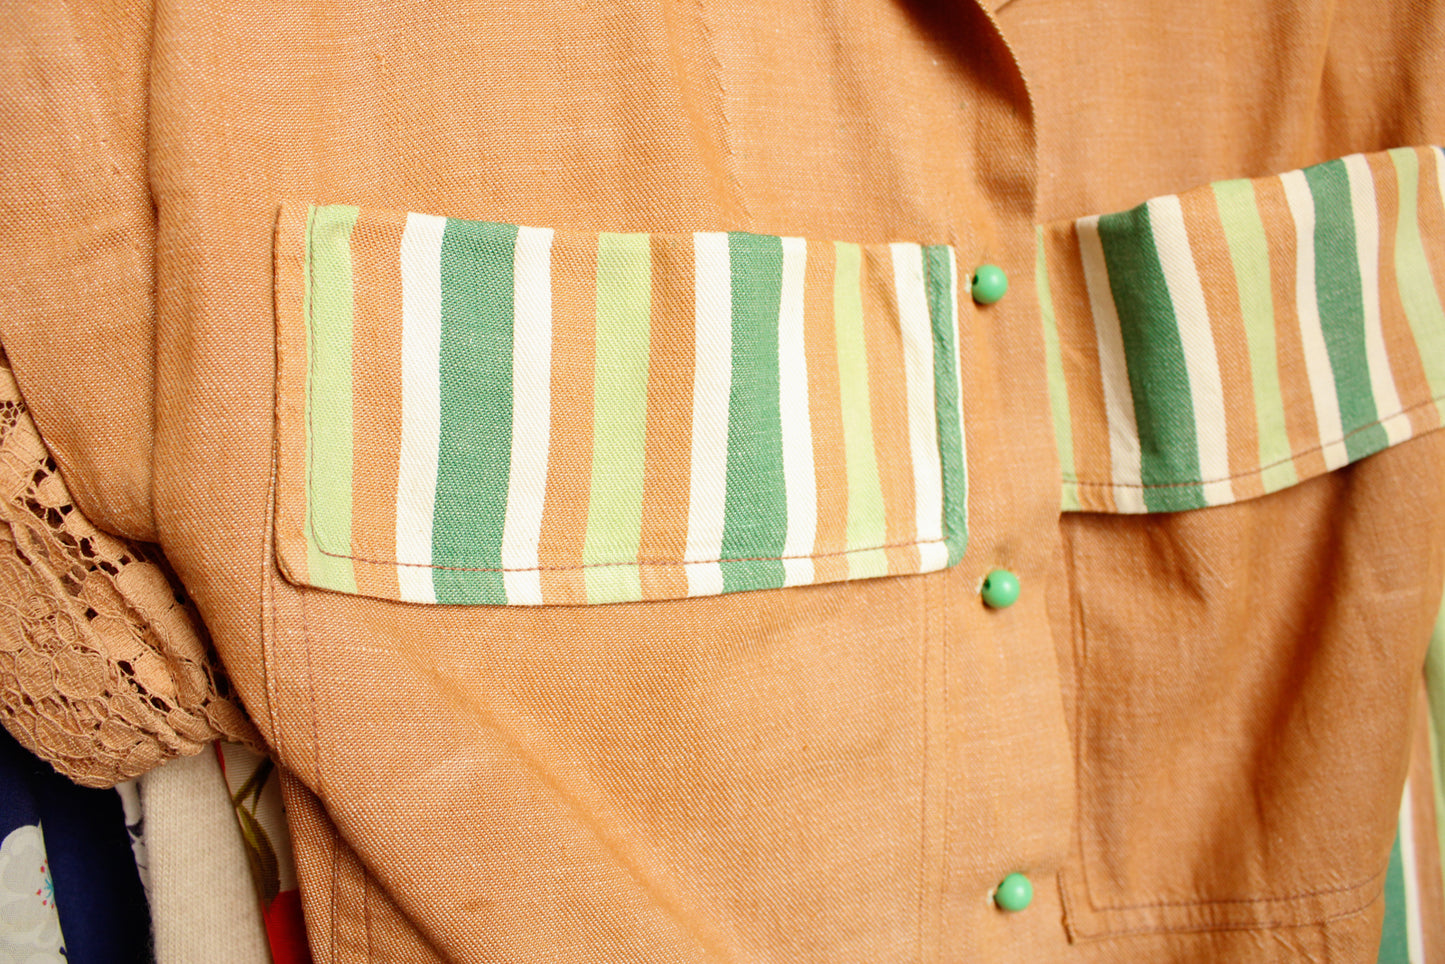 1940s Summer Blouse & Striped Skirt Set - Xsmall